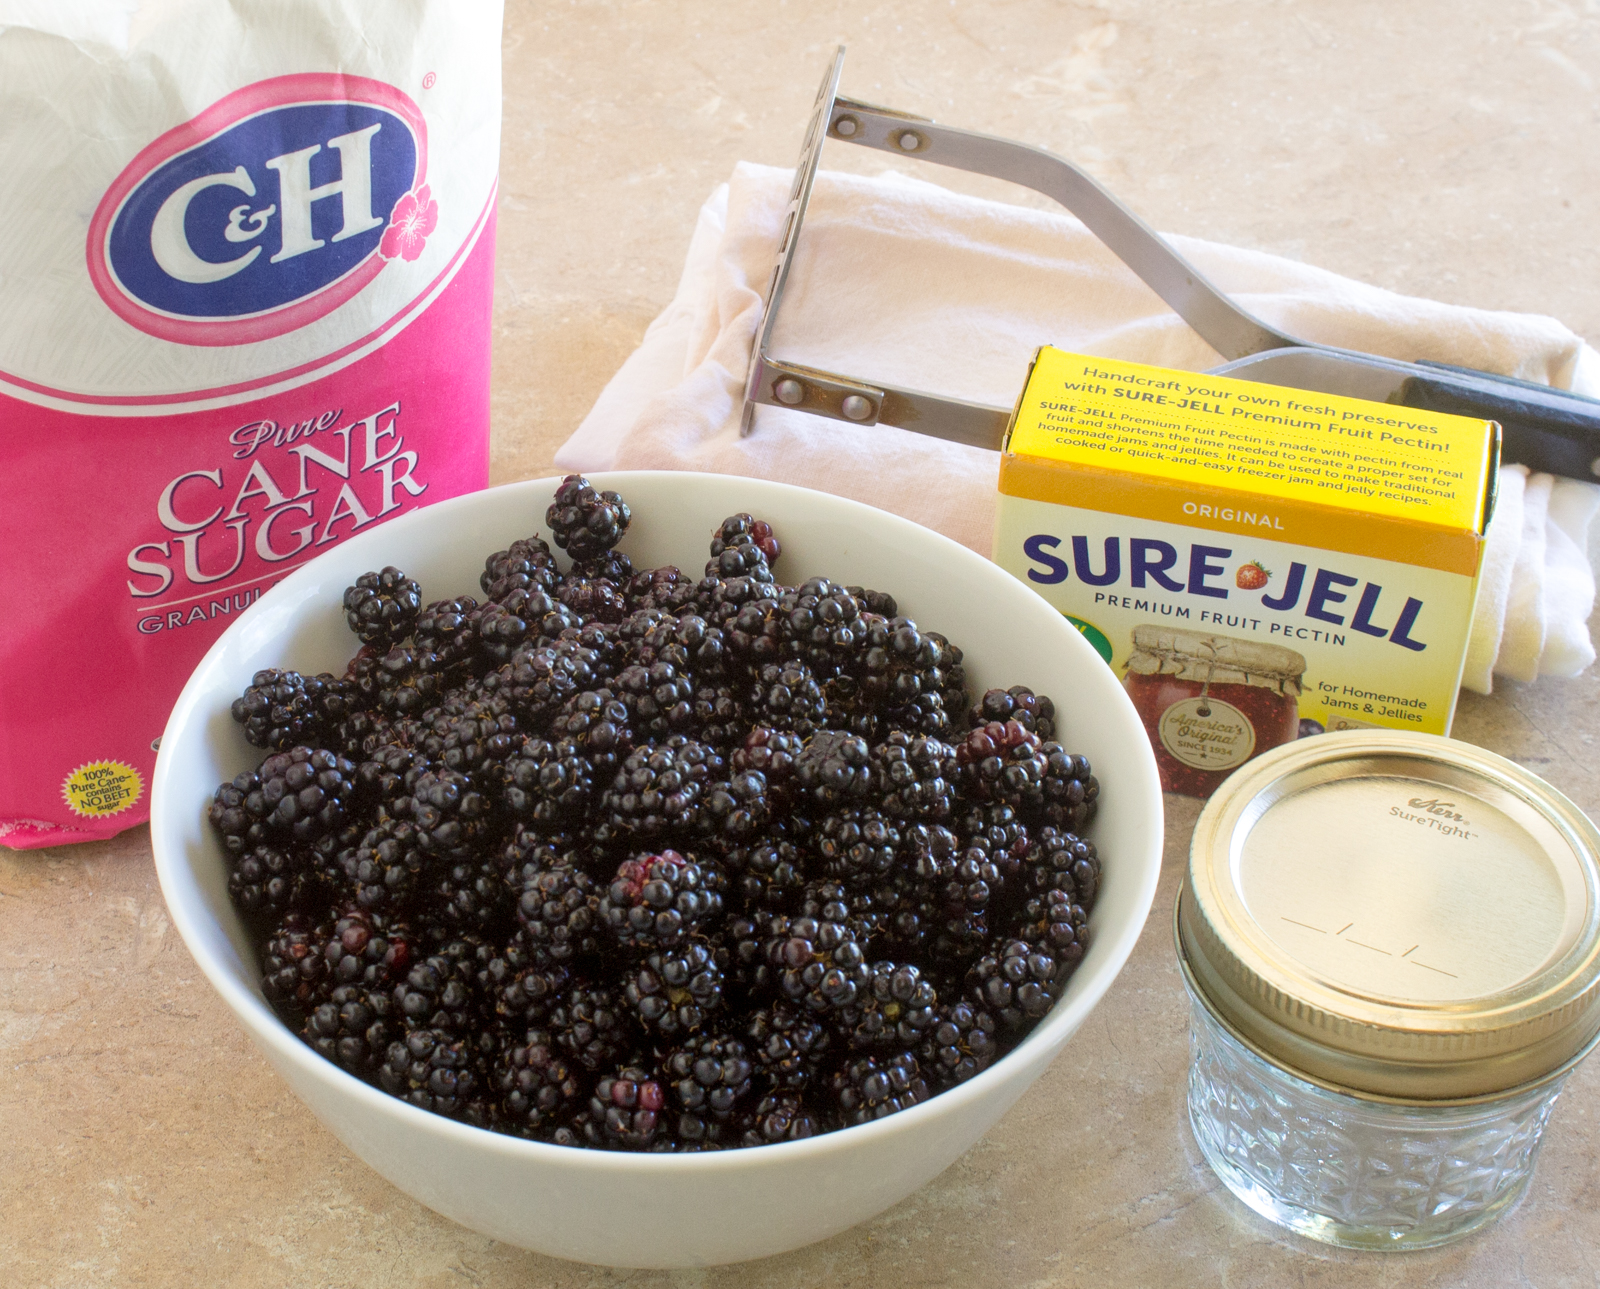 Ingredients: Sugar, blackberries, pectin, canning jars